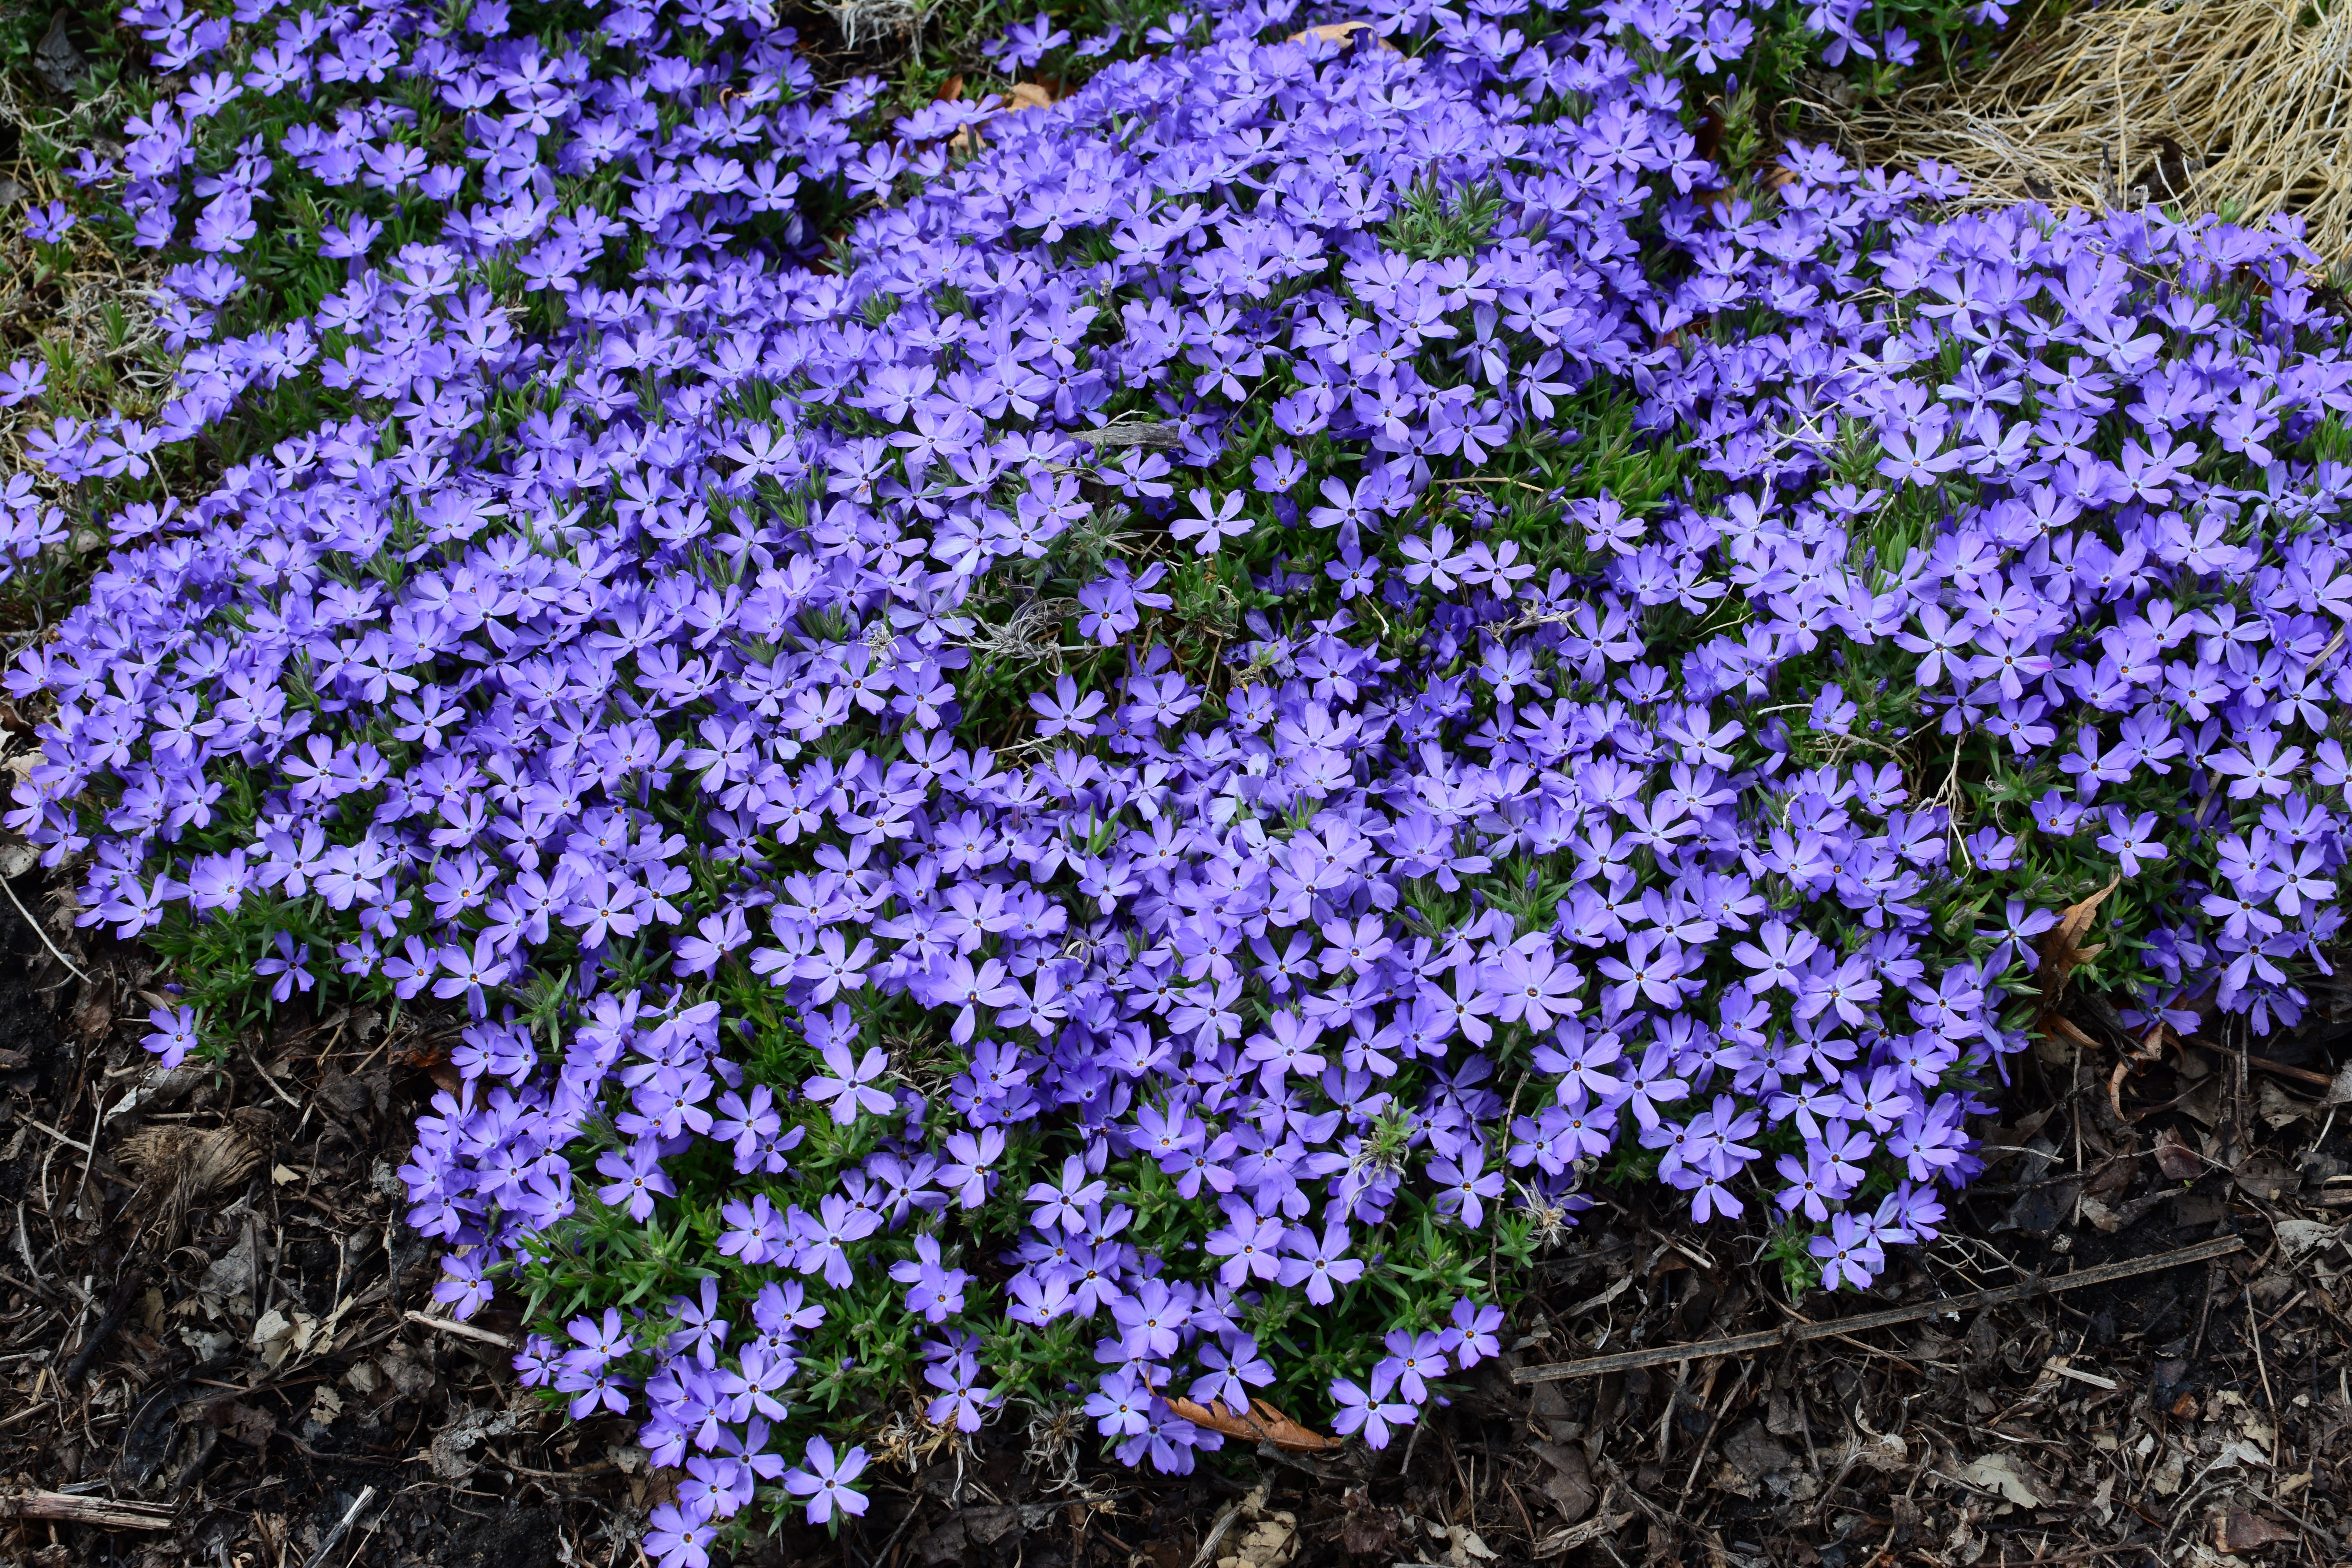 images/plants/phlox/phl-violet-pinwheels/phl-violet-pinwheels-0002.jpg